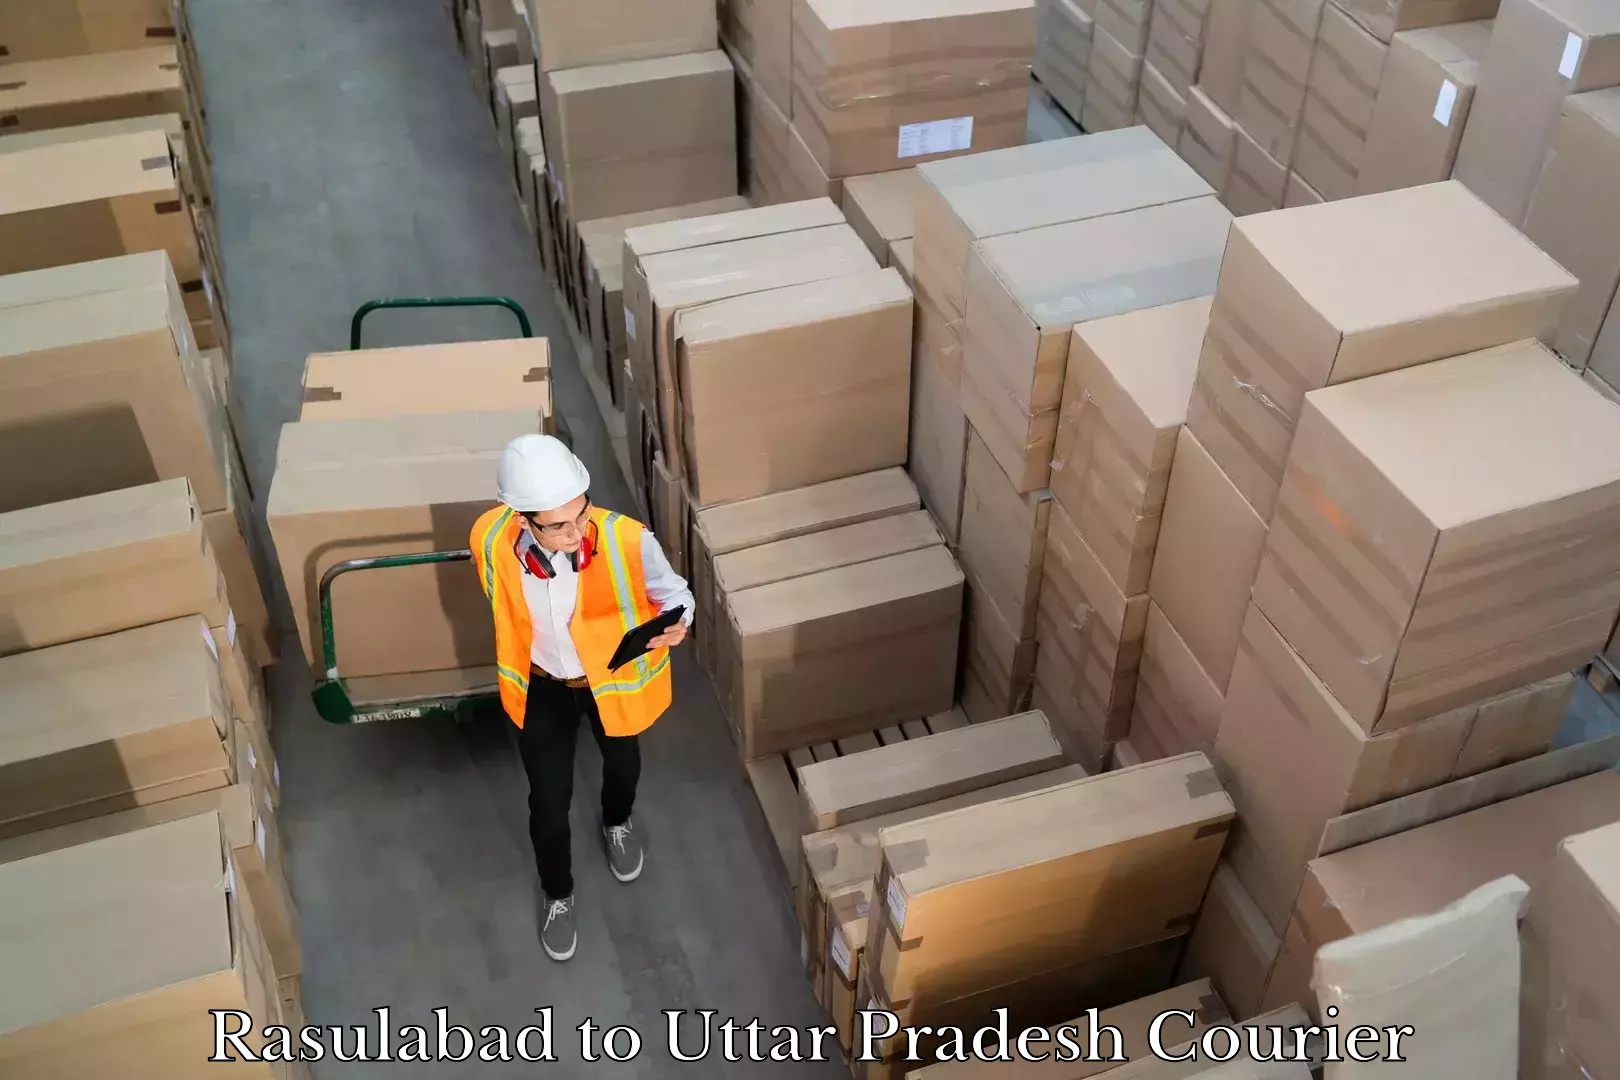 Express delivery capabilities Rasulabad to Uttar Pradesh